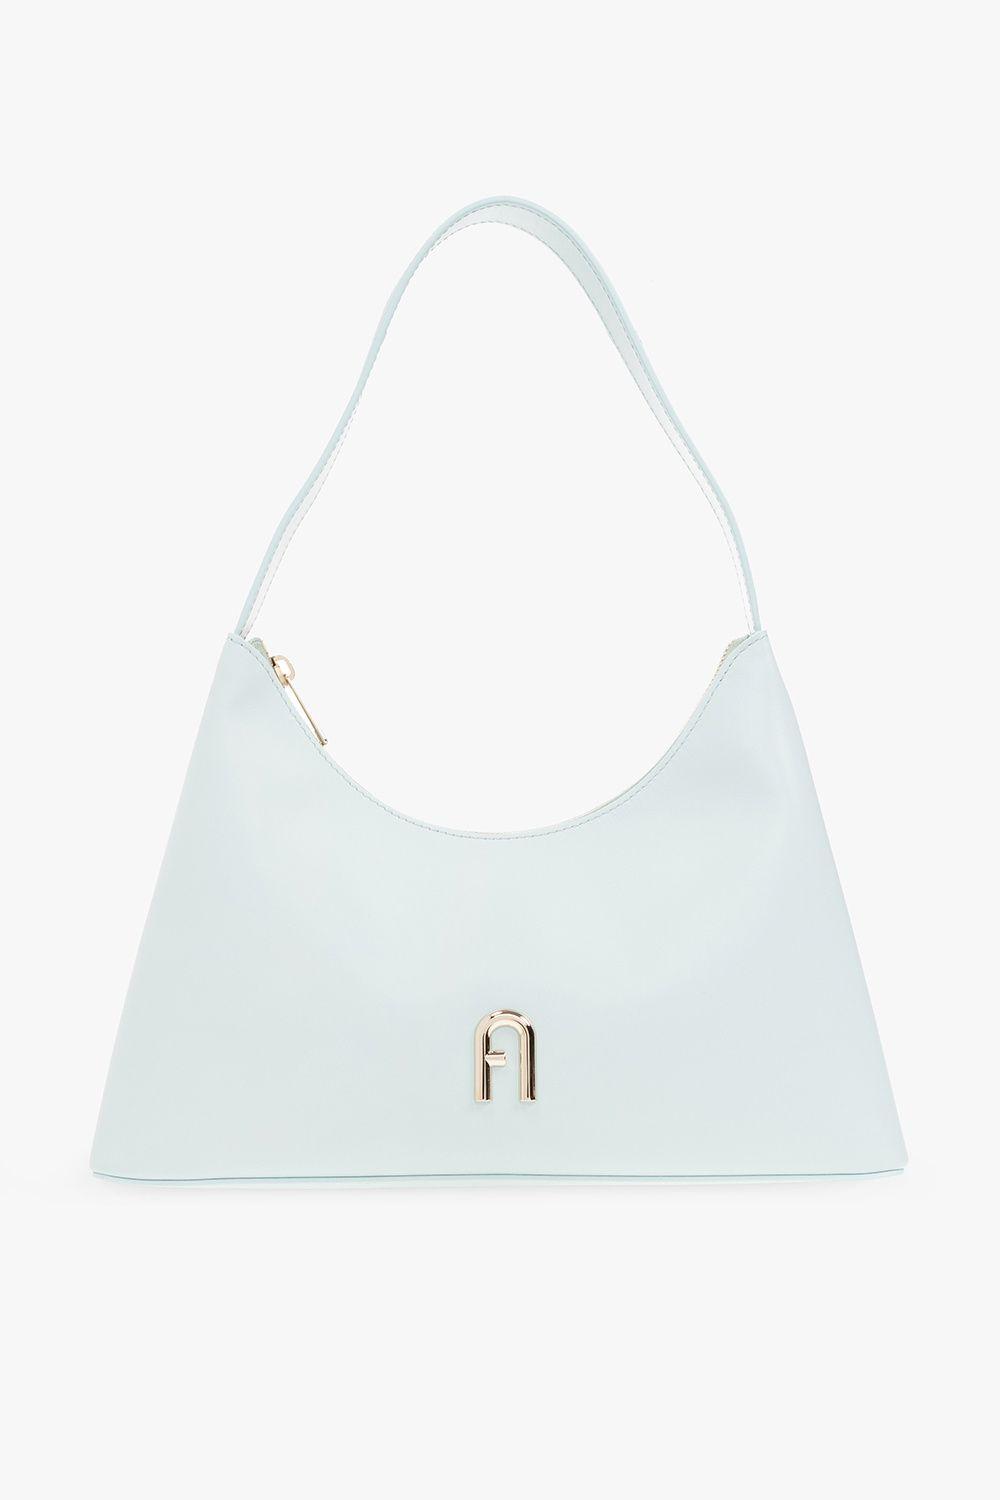 Furla 'diamante Small' Hobo Shoulder Bag in White | Lyst